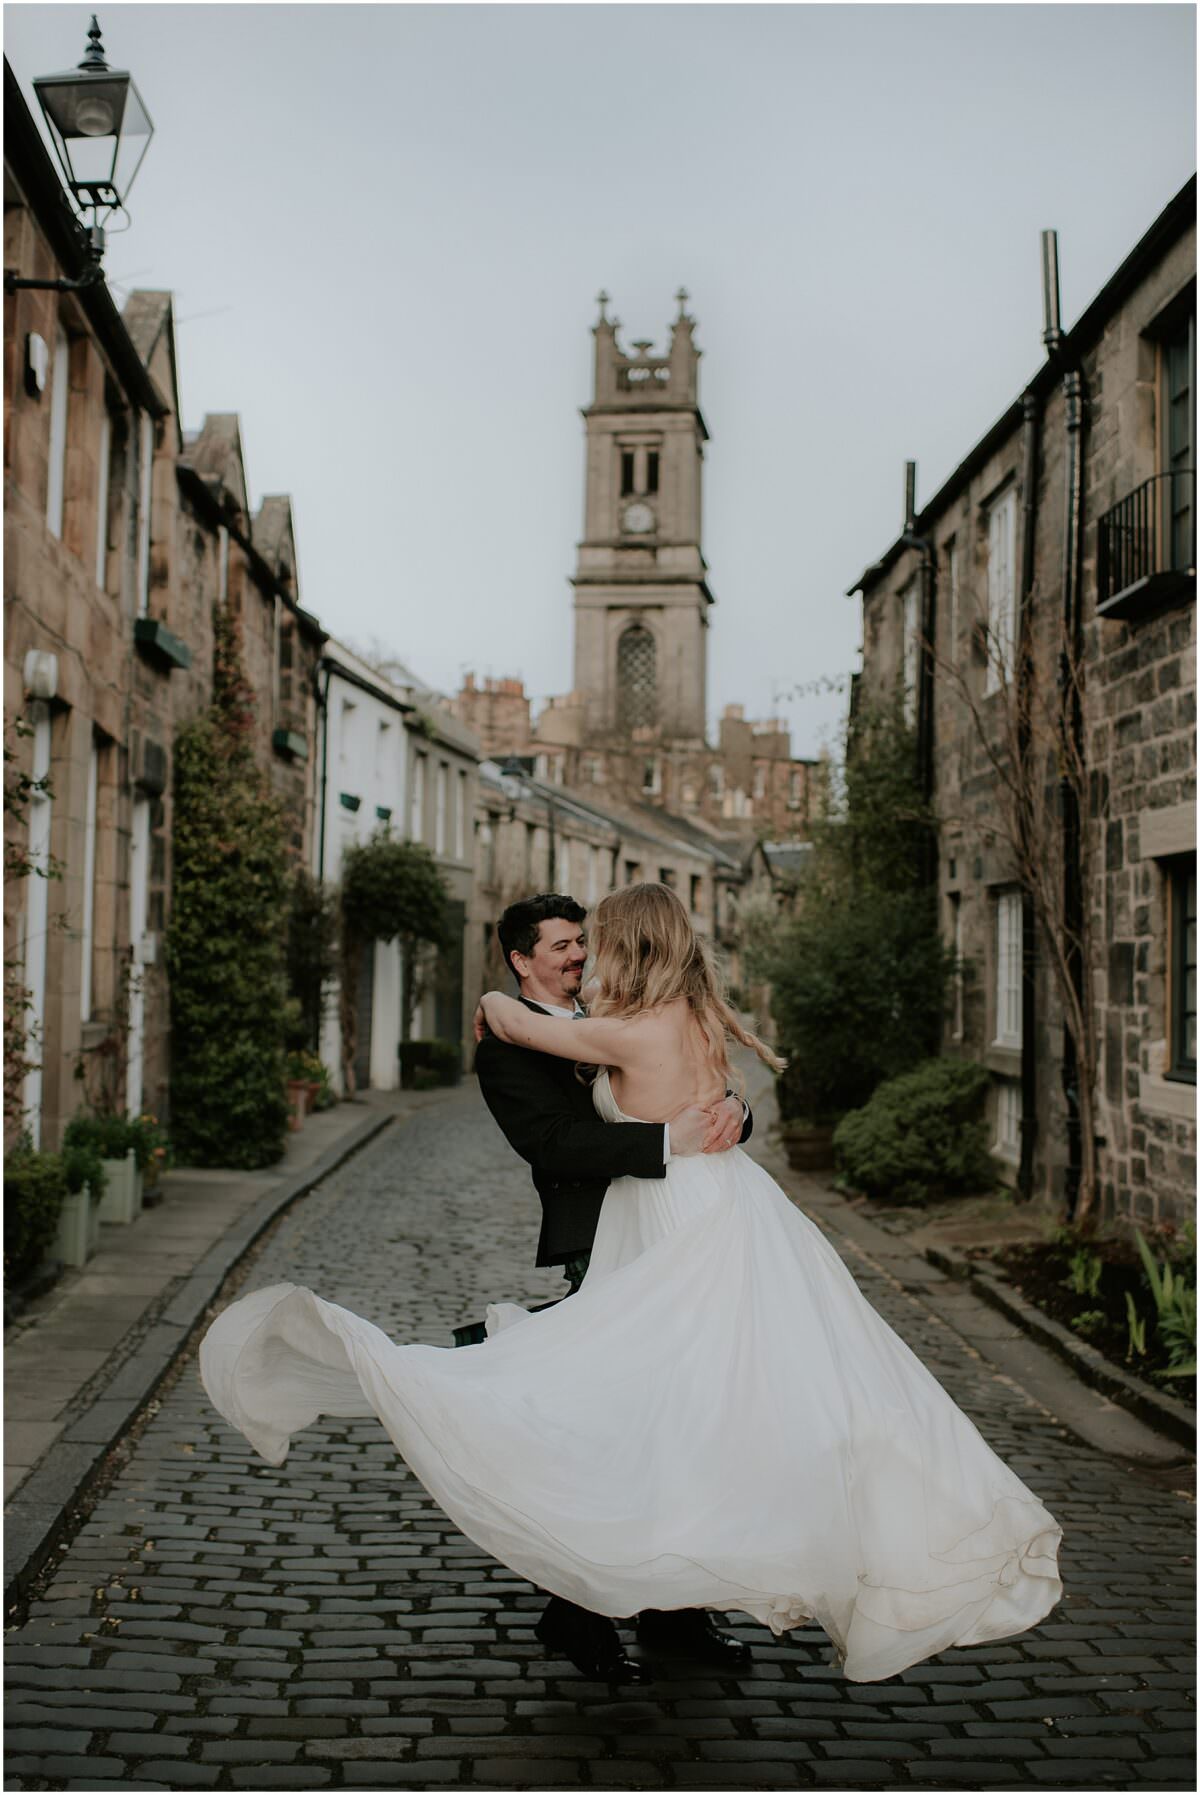 Edinburgh elopement - elopement photographer Edinburgh